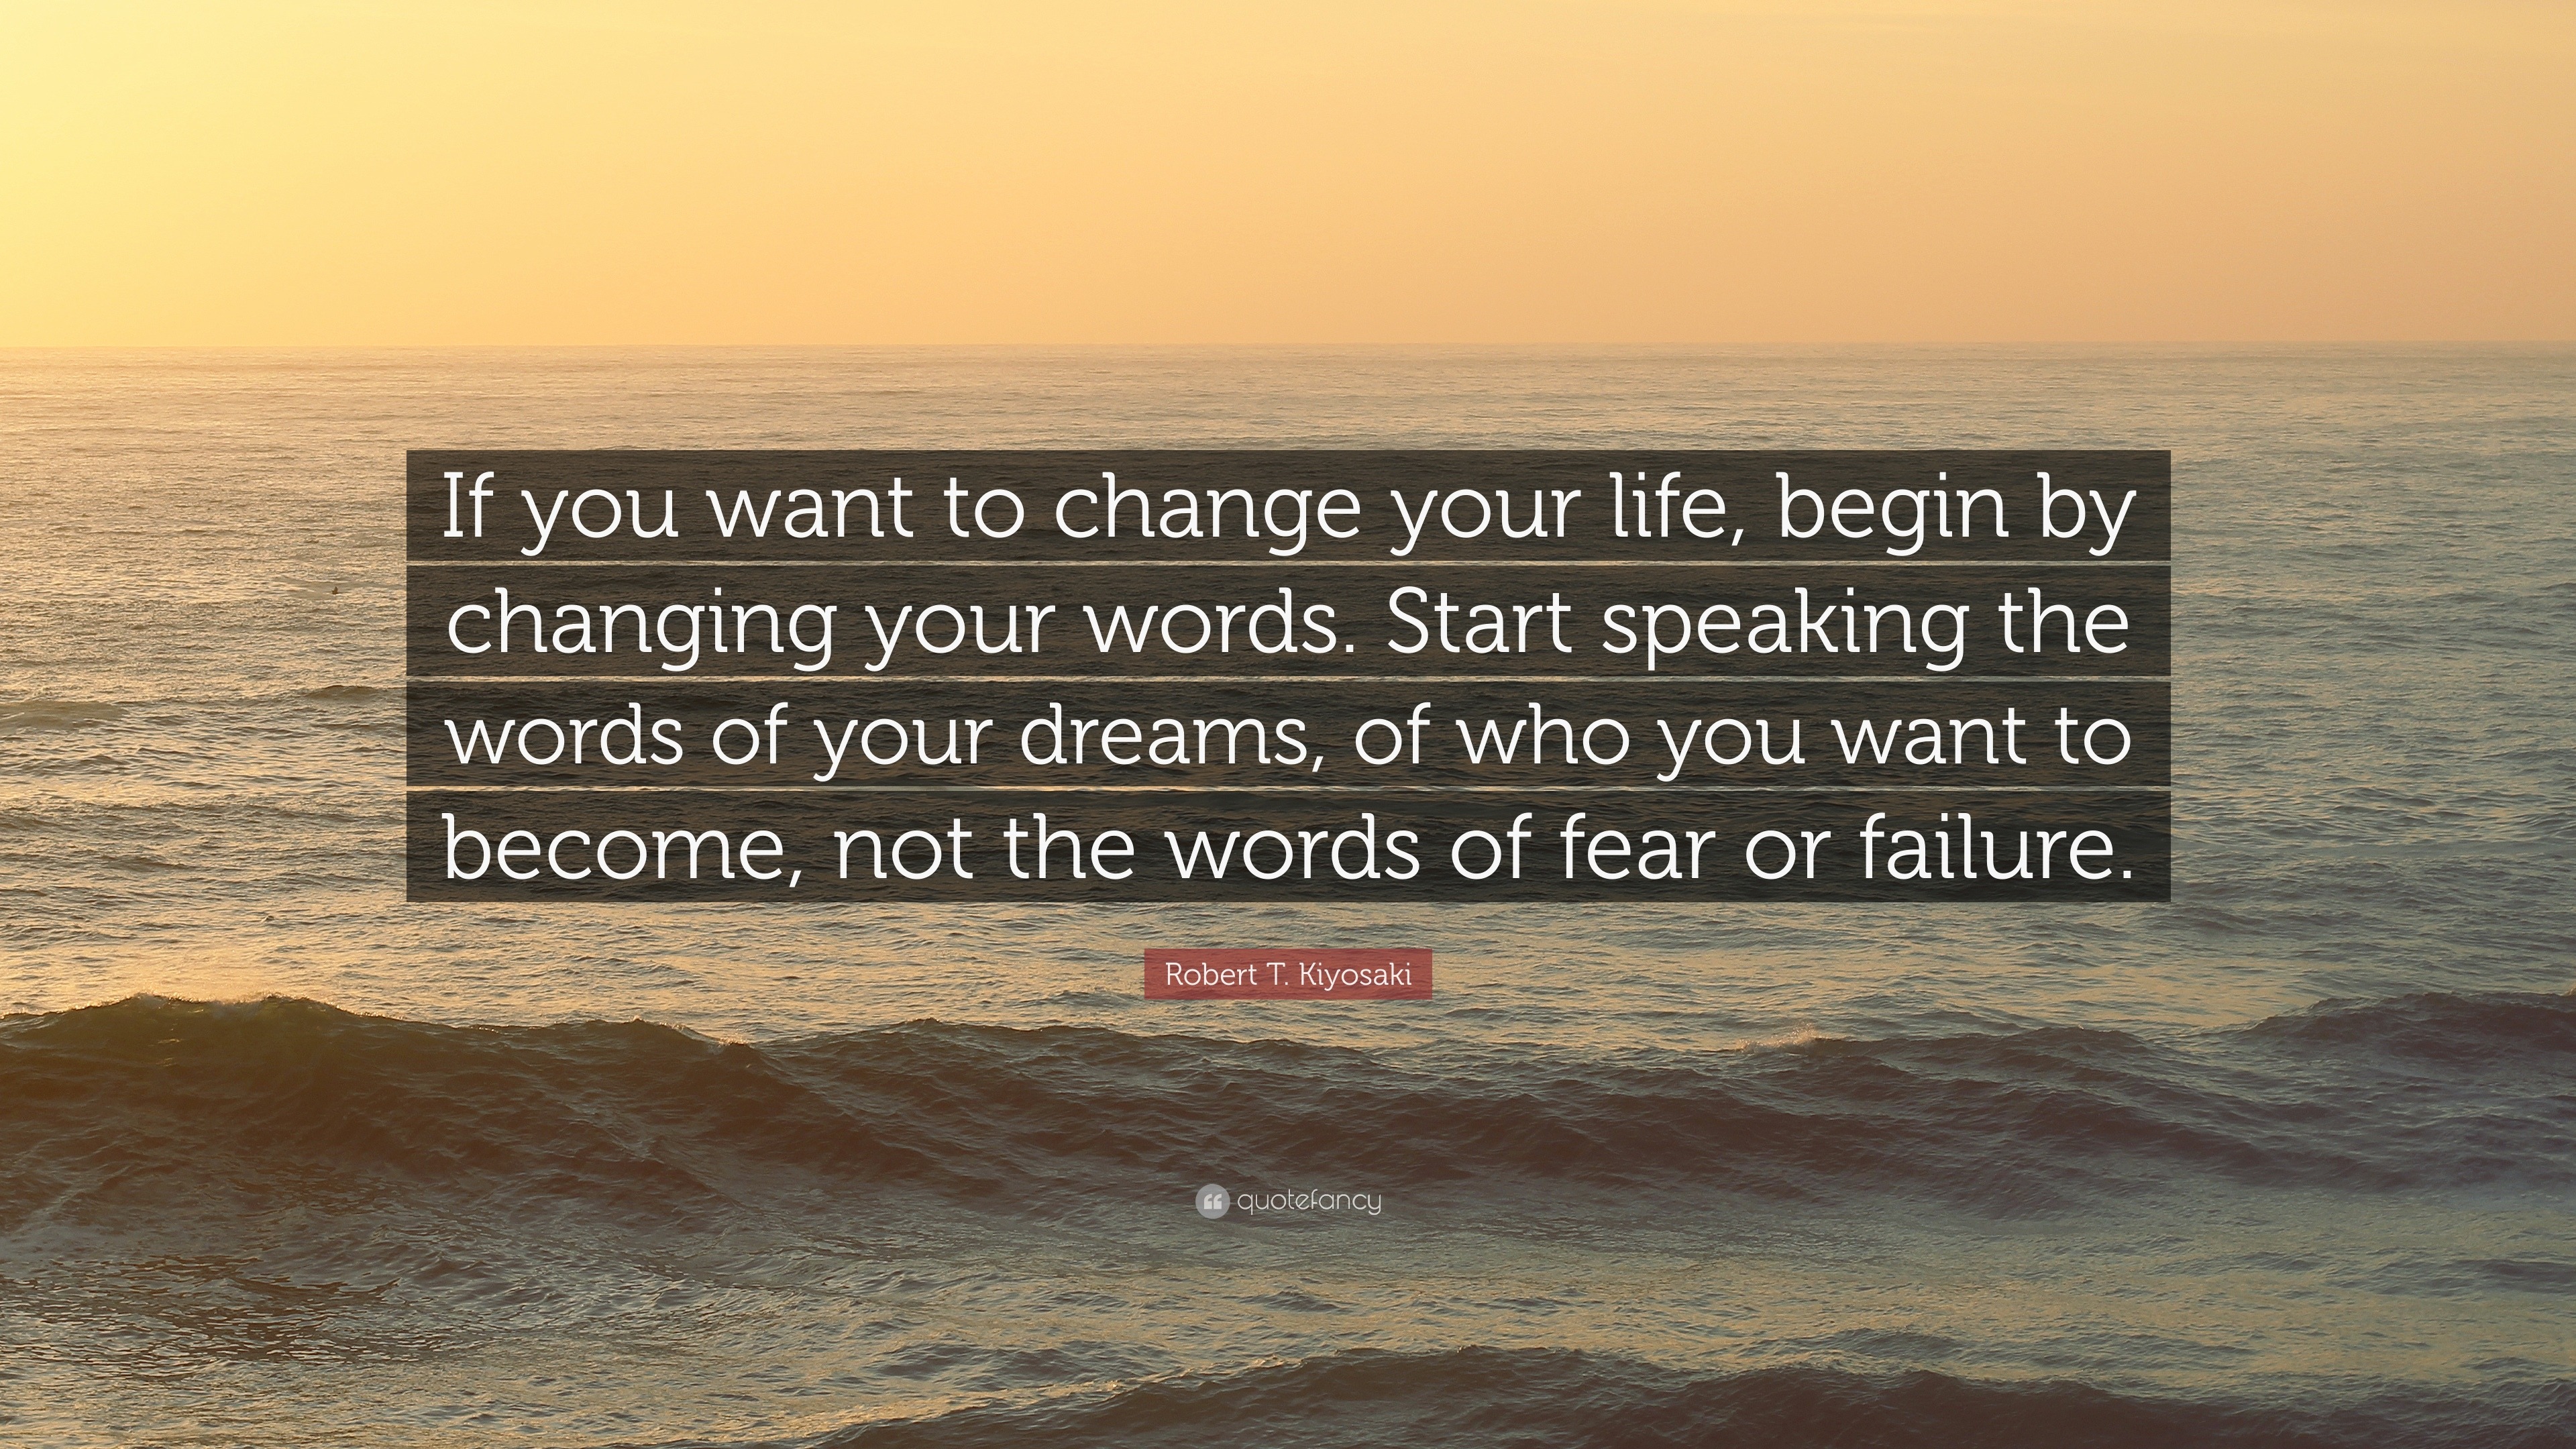 Robert T Kiyosaki Quote “If you want to change your life begin